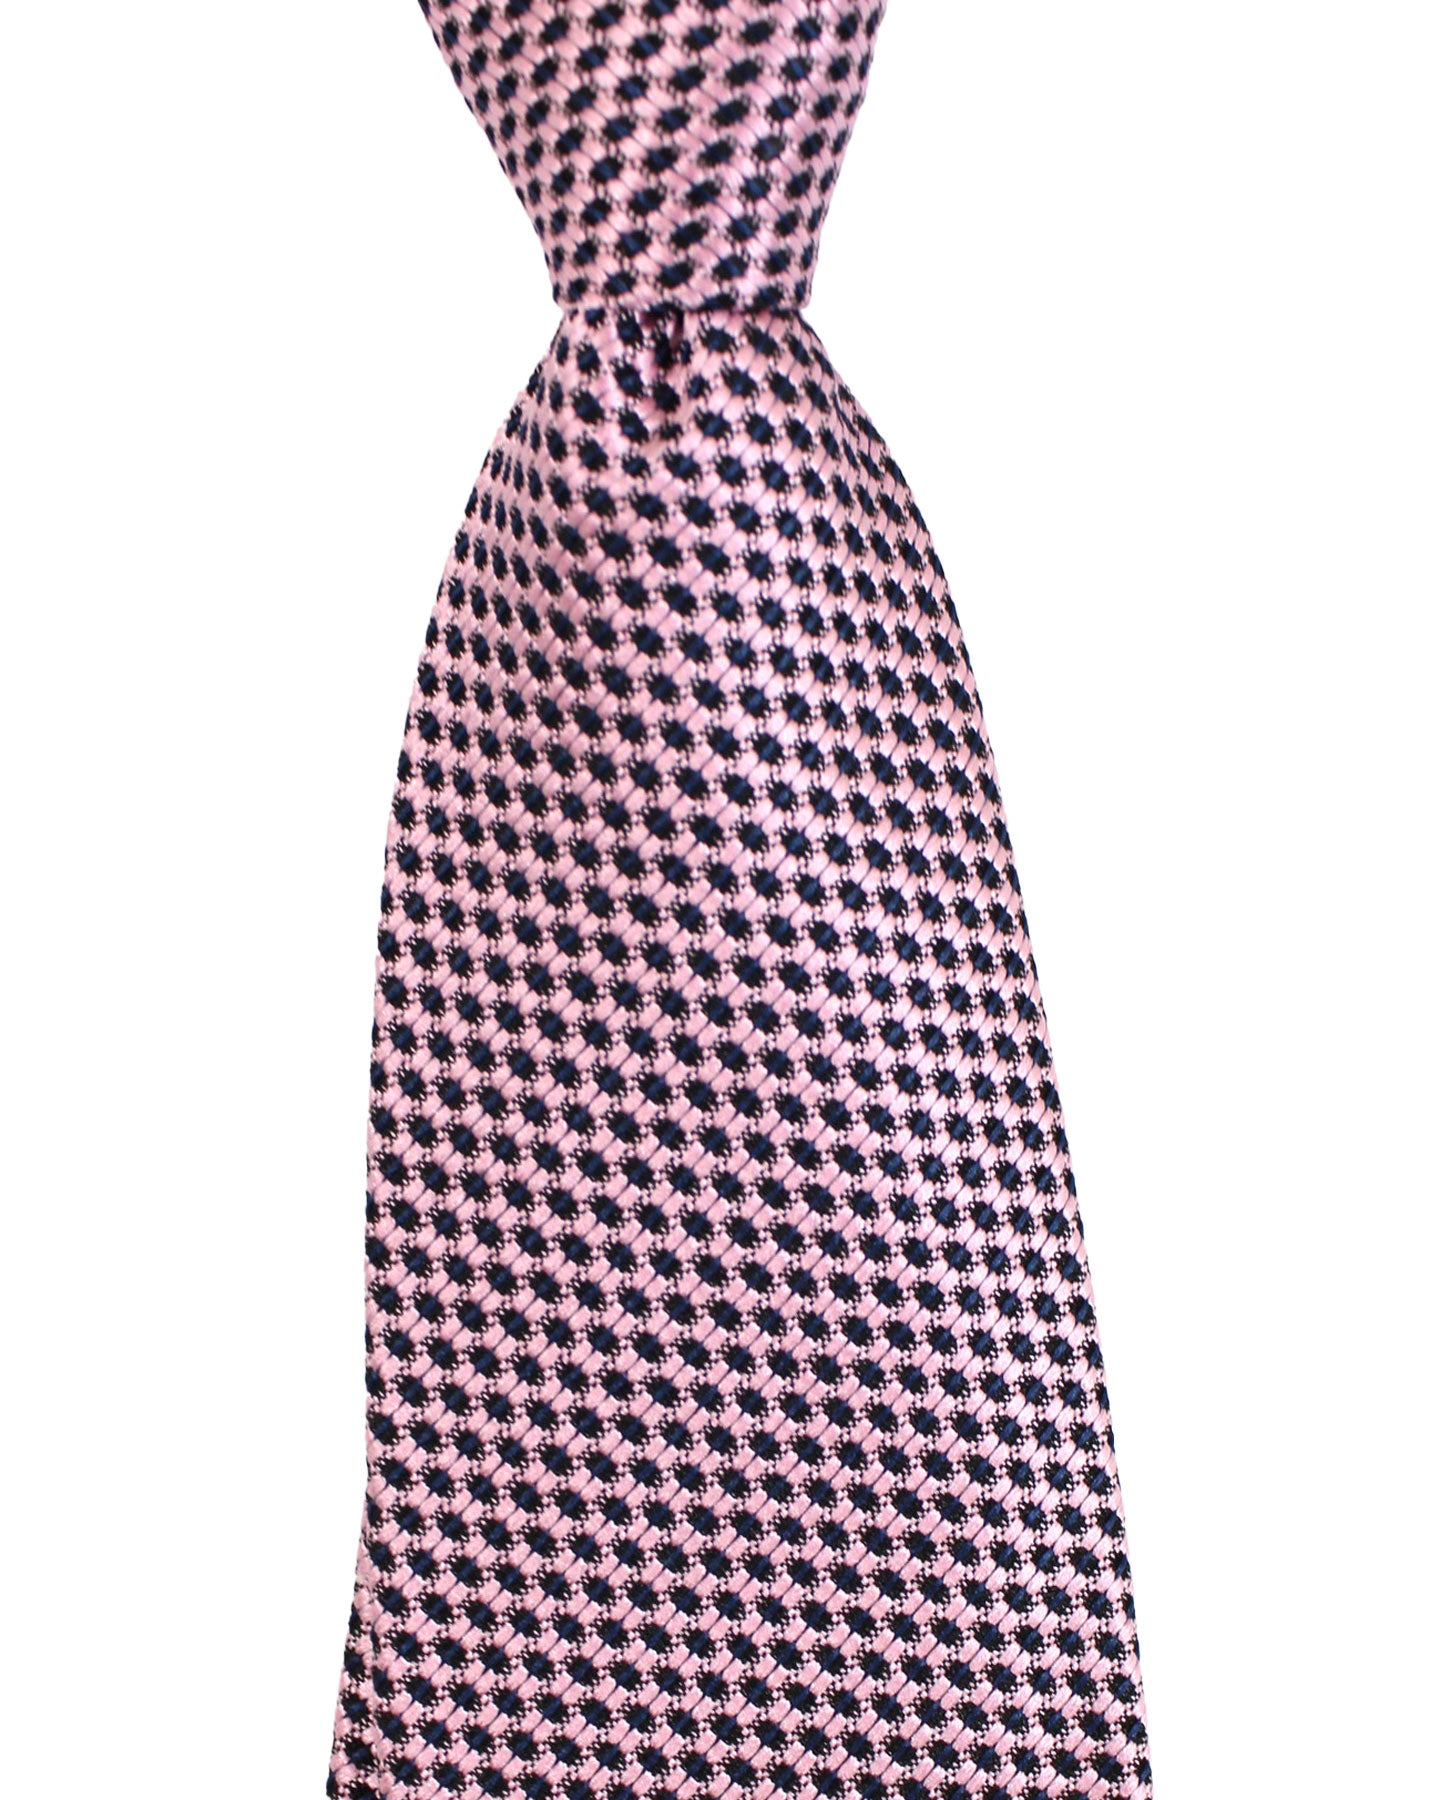 Ermenegildo Zegna Silk Tie Pink Midnight Blue Micro Pattern - Hand Made in Italy